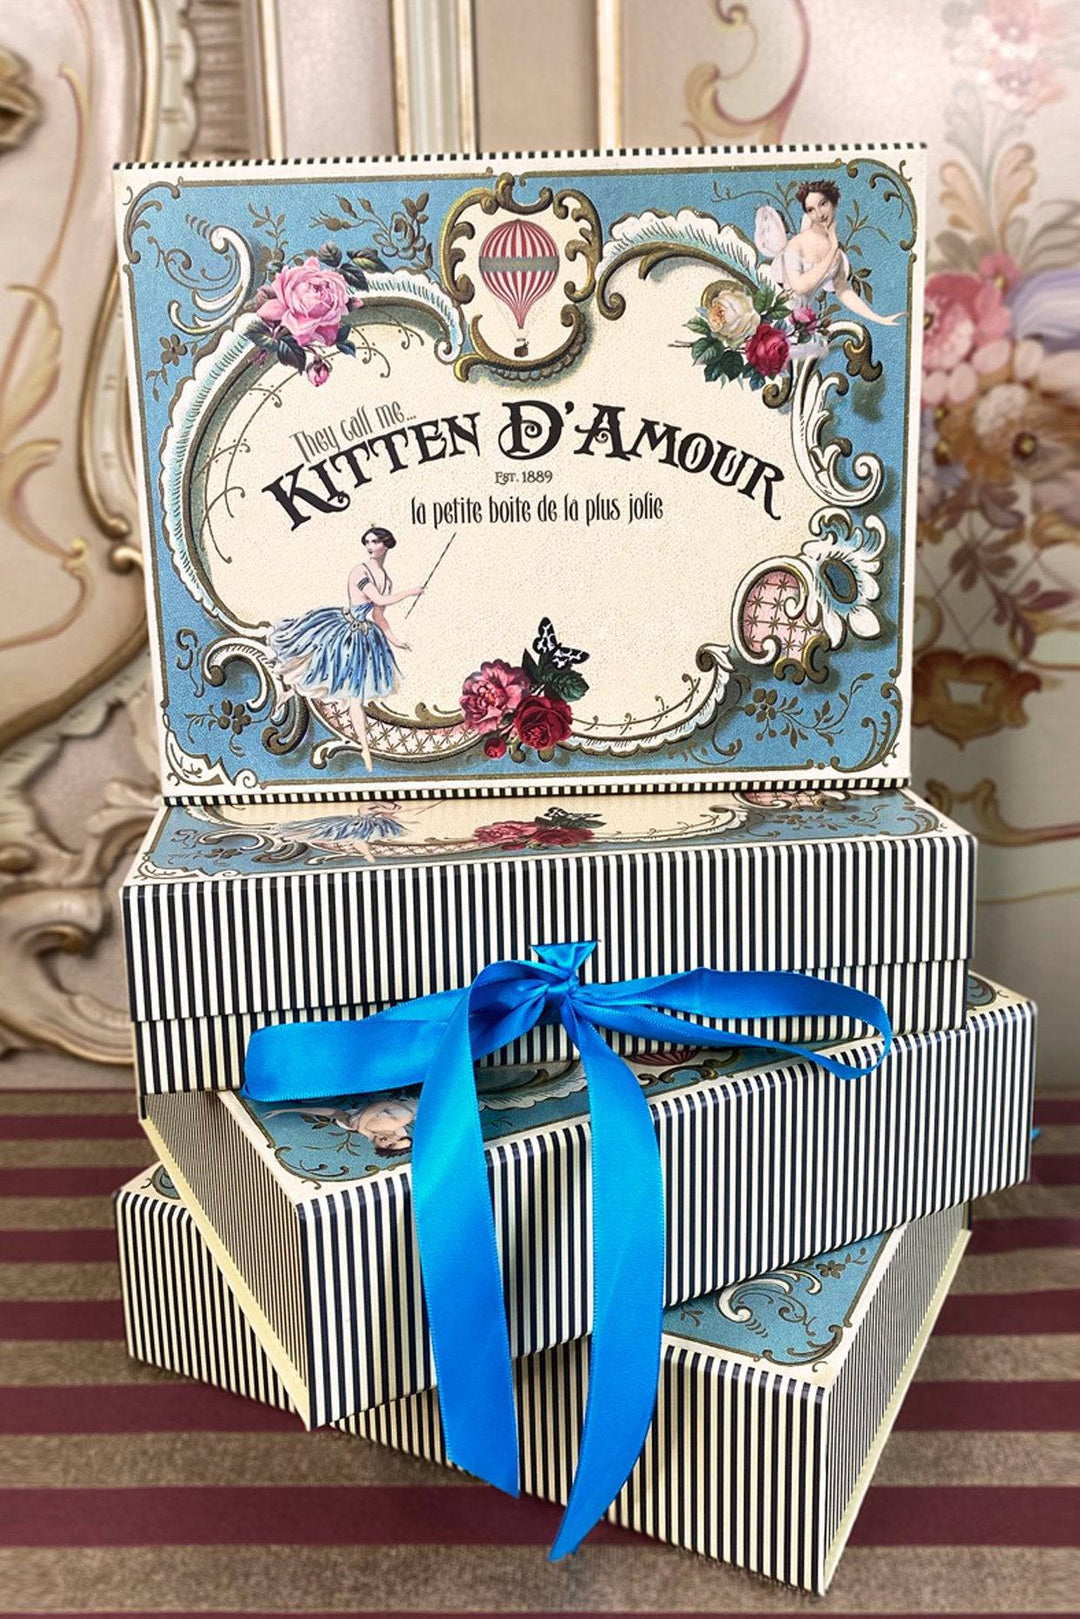 D'Amour Gift Box - Kitten D'Amour